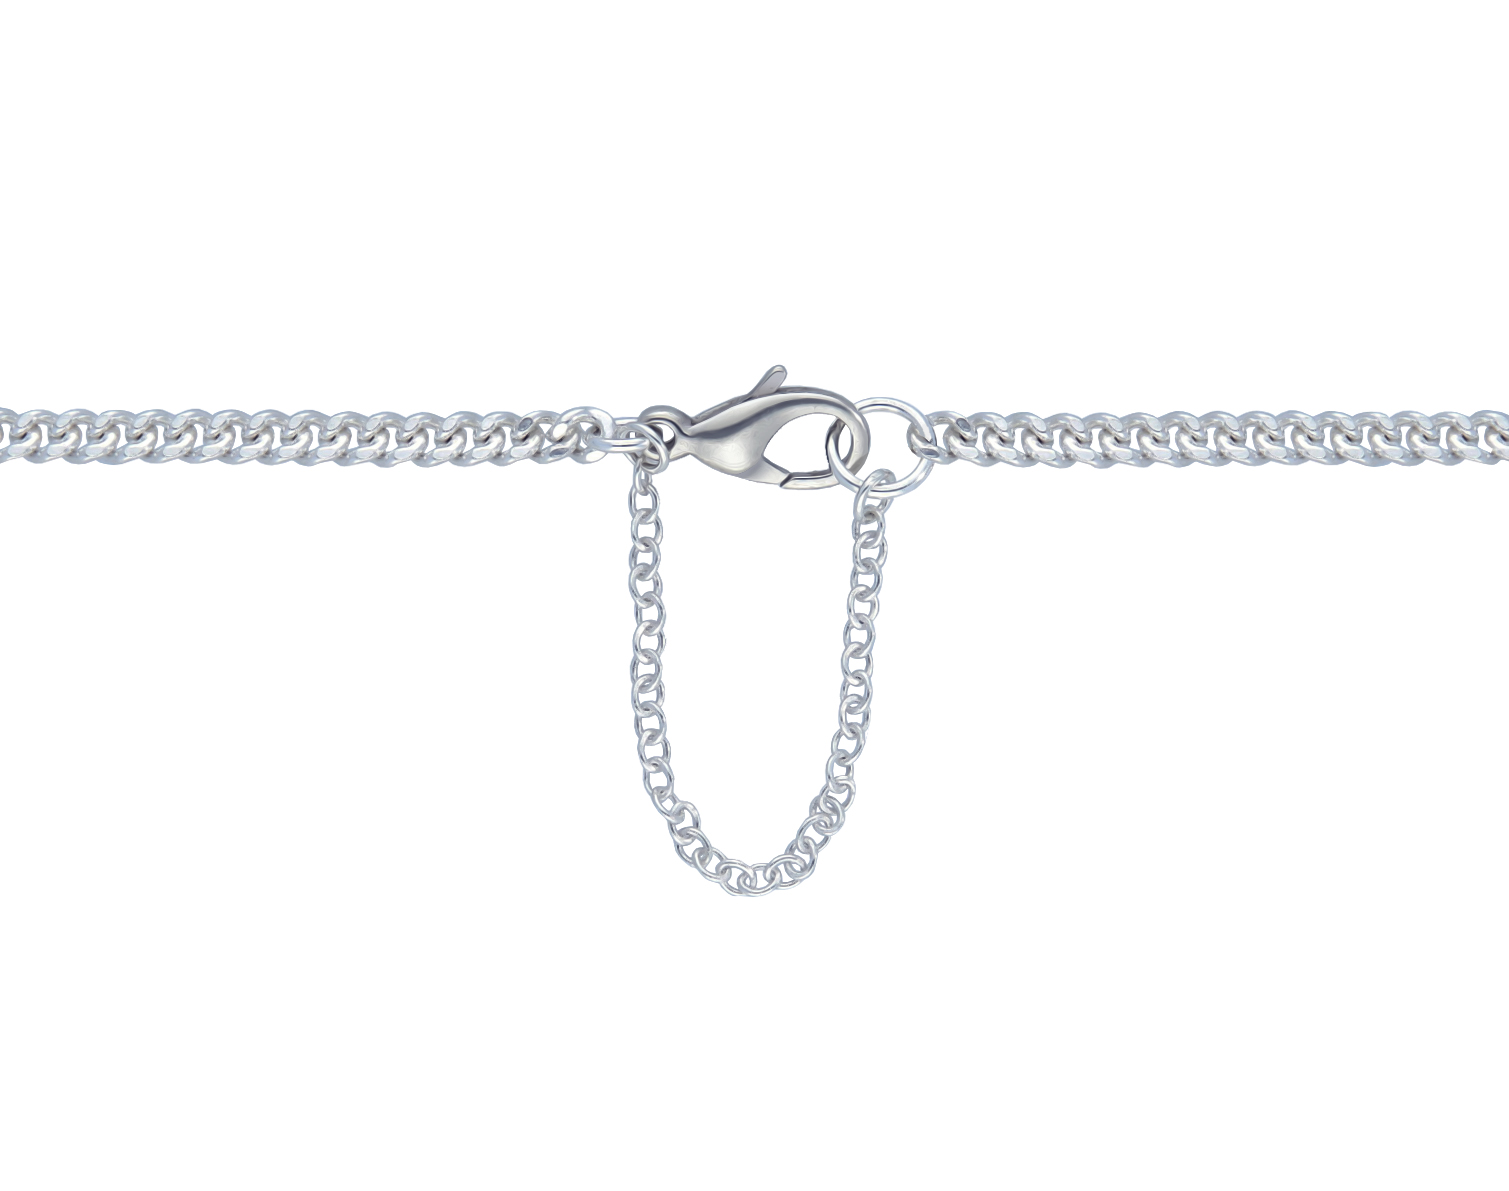 1 mm SOLID 14K WHITE GOLD Extender /Safety Chain Necklace Bracelet spring  lock | eBay